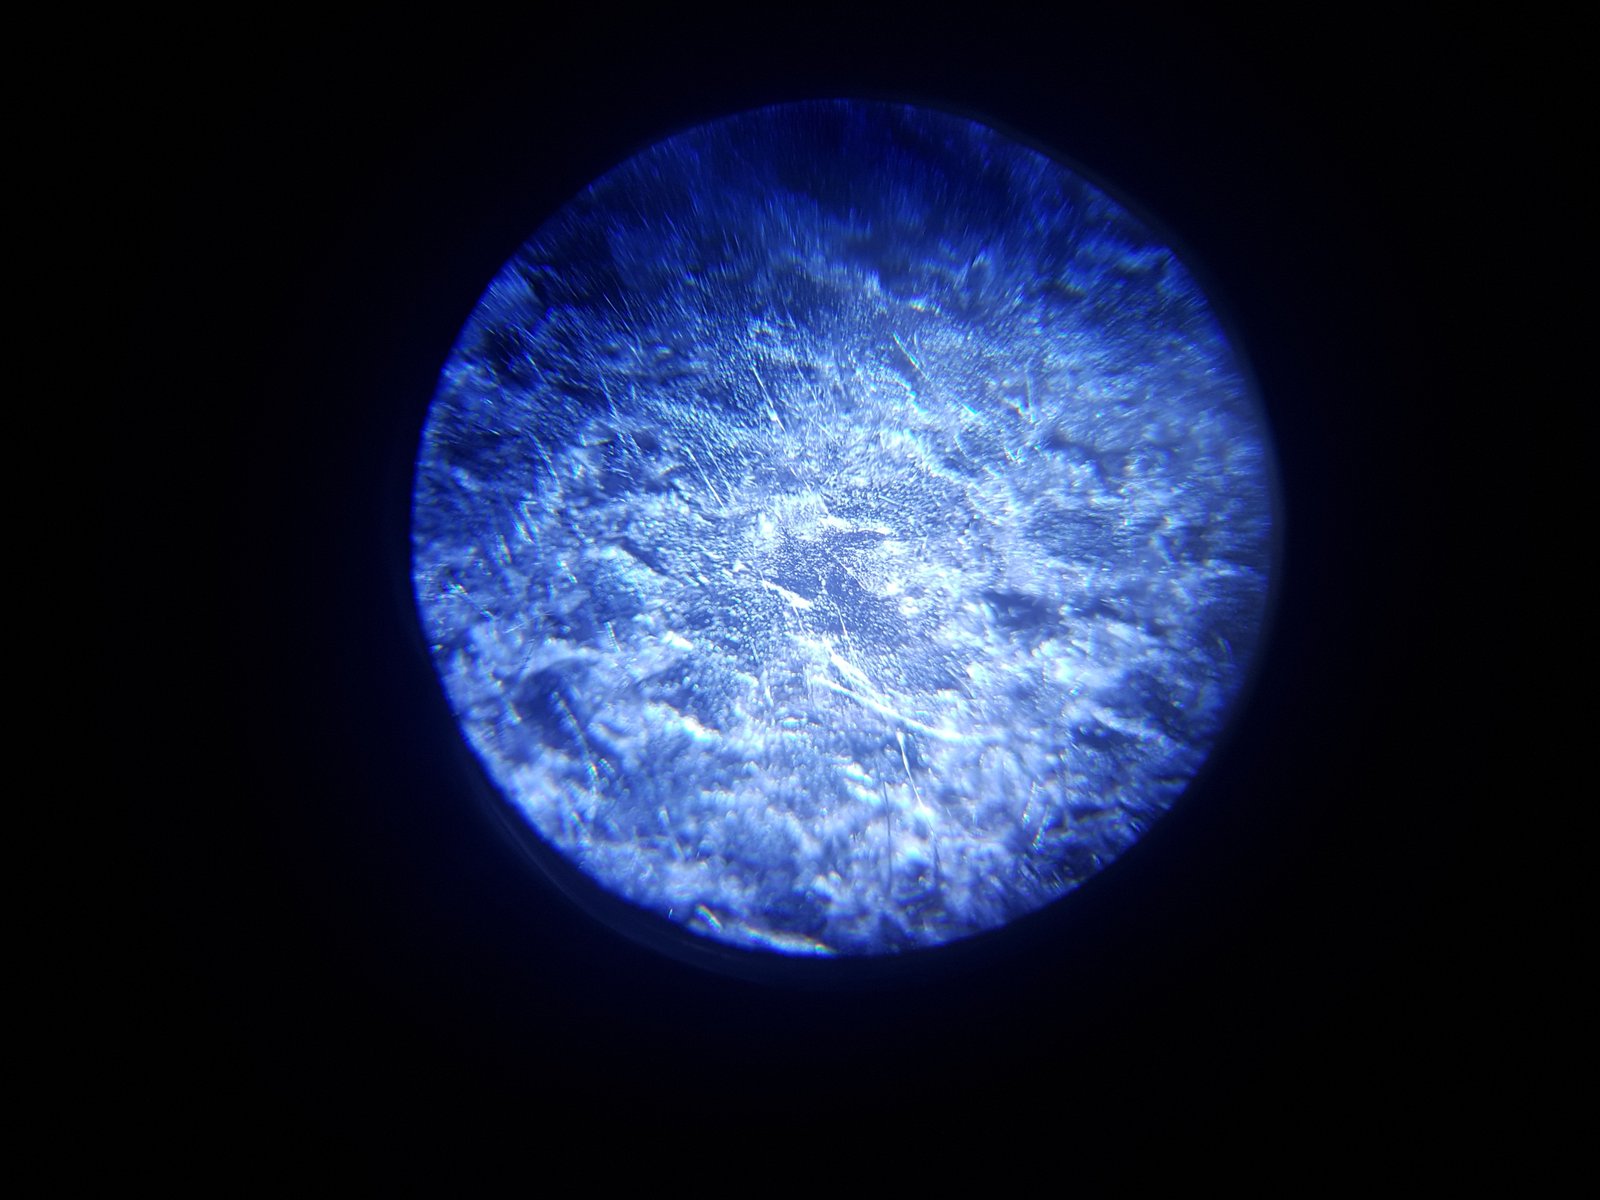 Microfibre by microscope